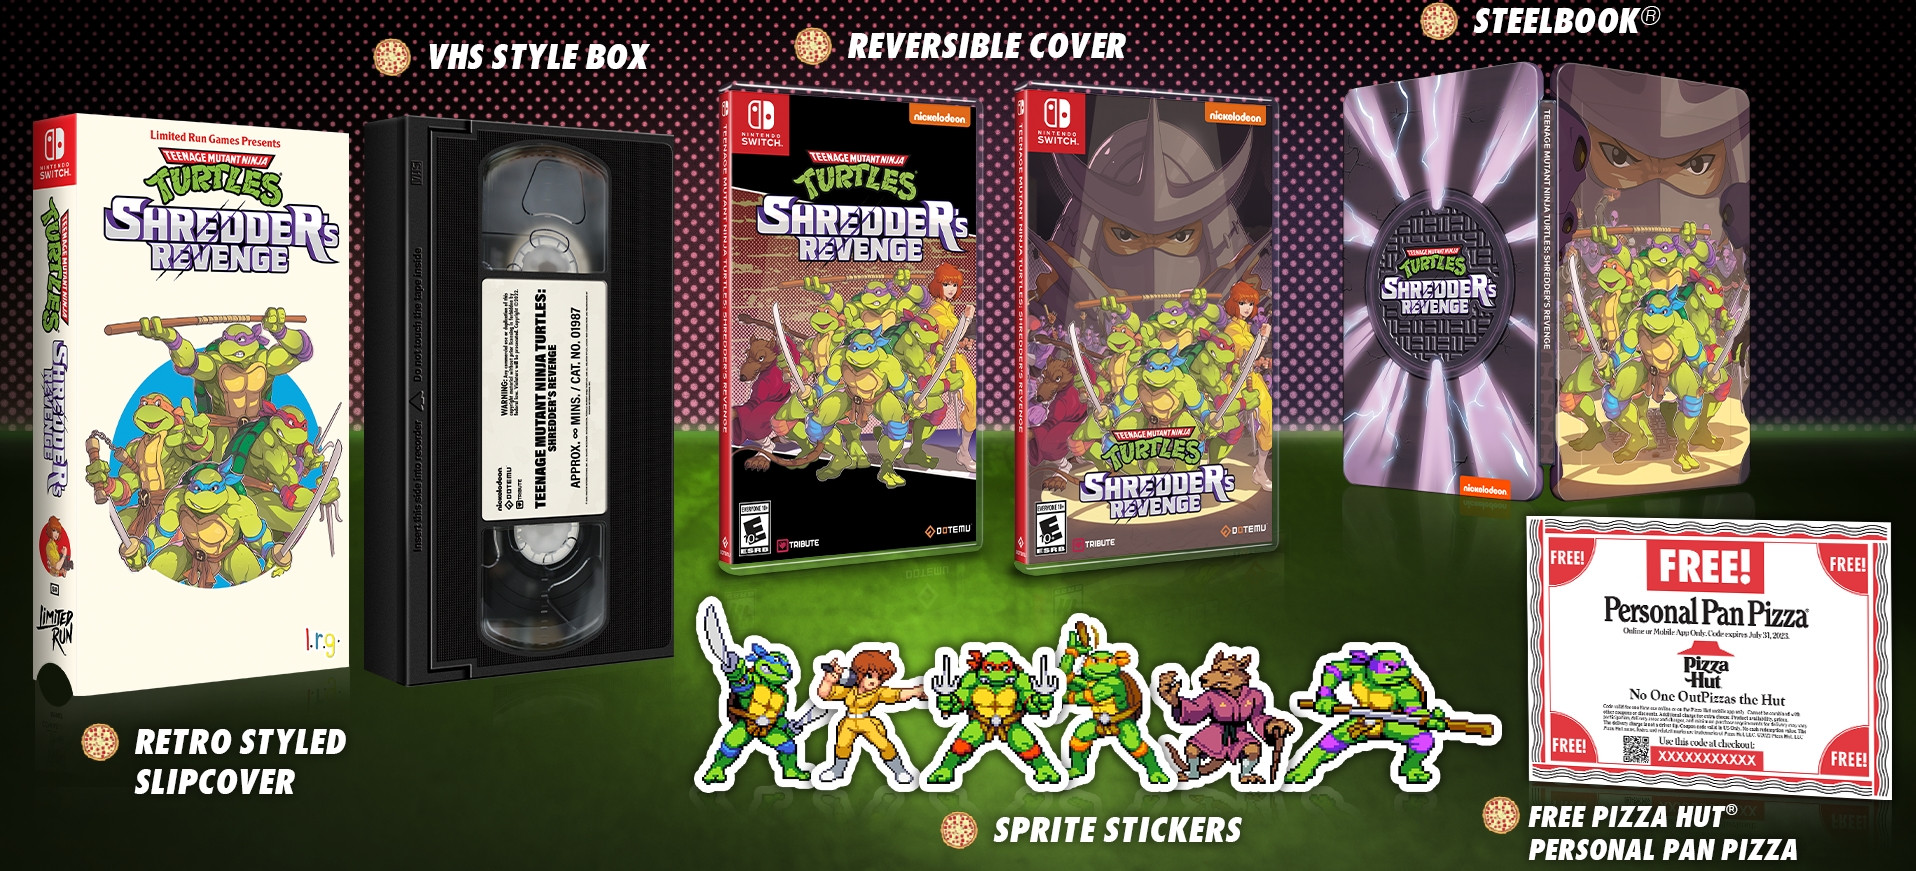 Teenage Mutant Ninja Turtles Shredder's Revenge Classic Edition (Limited Run Games) - Nintendo Switch